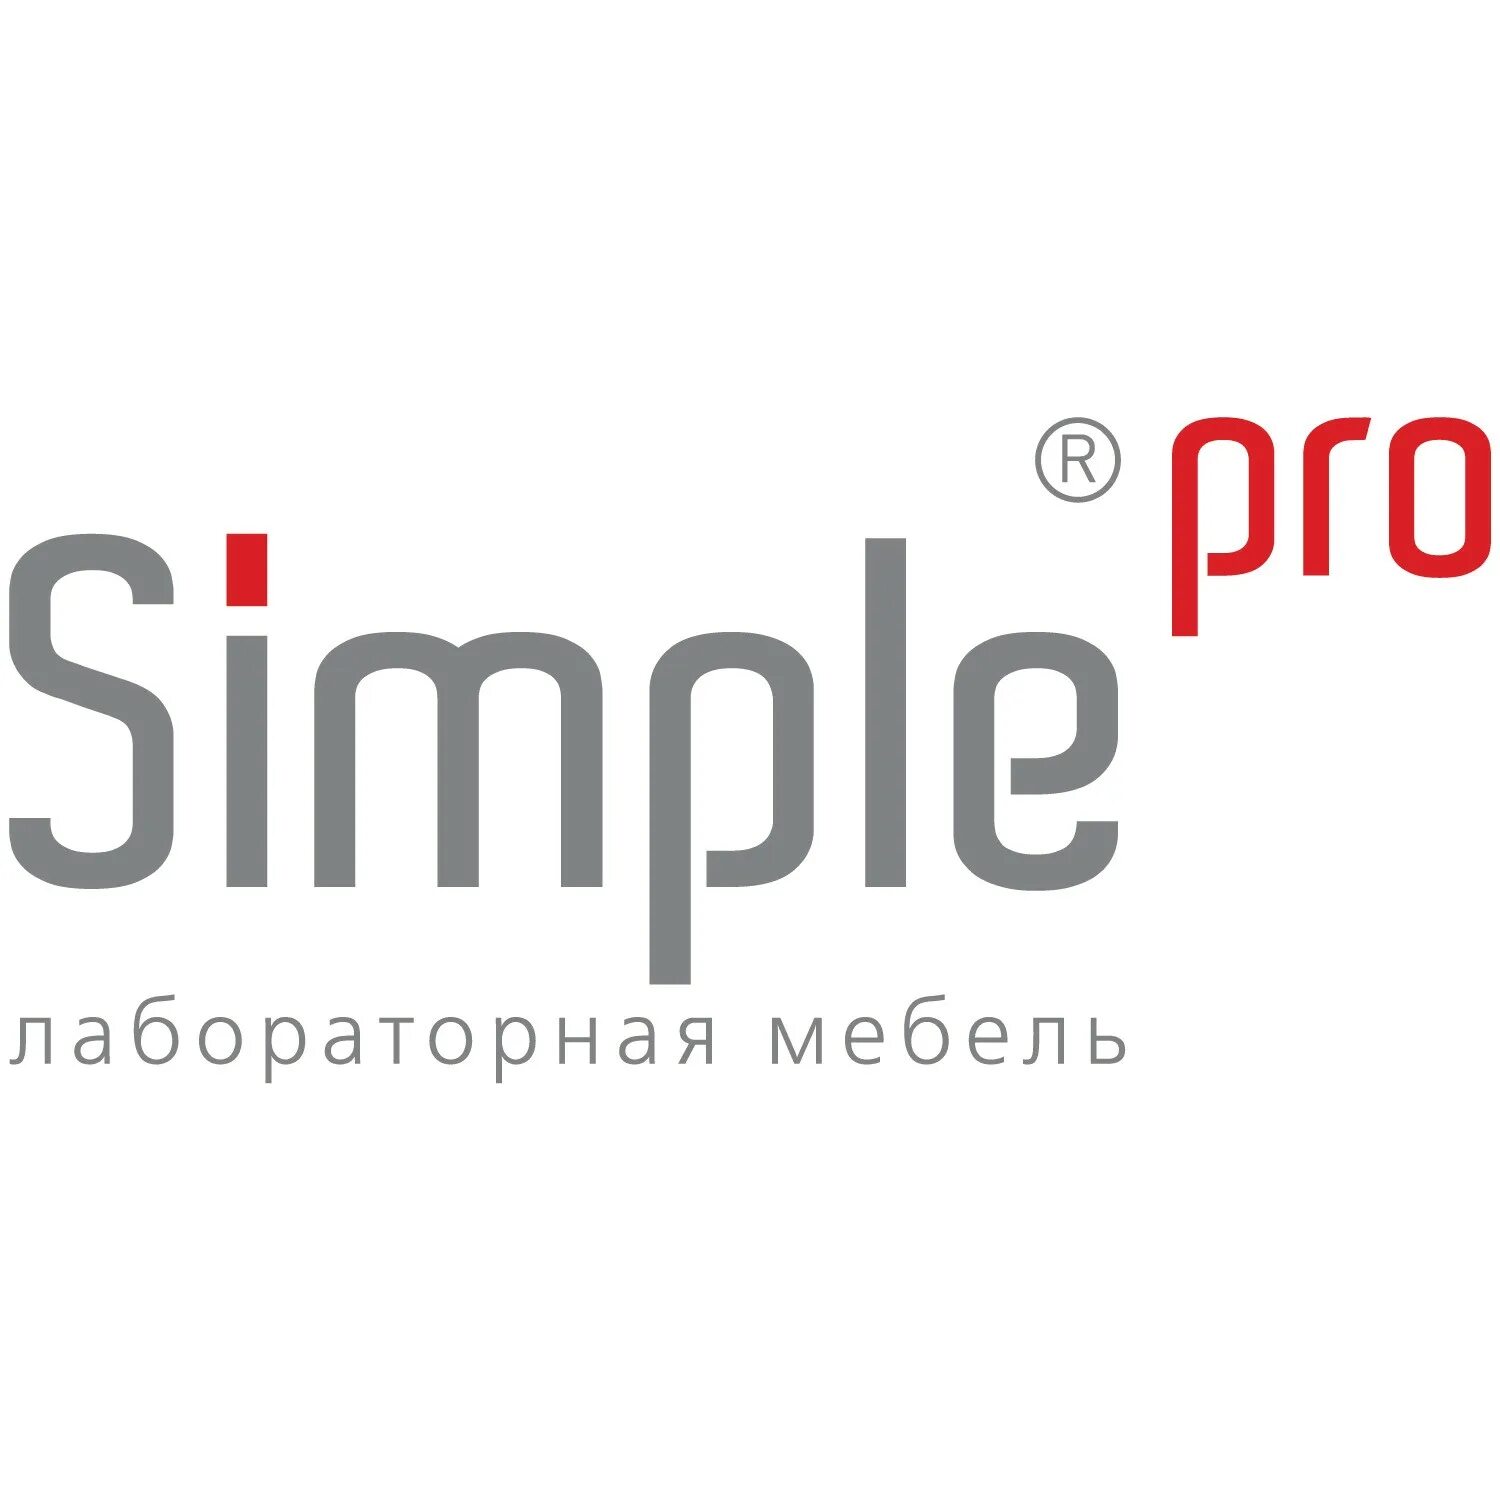 Мебель лабораторная SIMPLEPRO. Simple Pro. Спецбалт мебель. Simple компания. Simple company